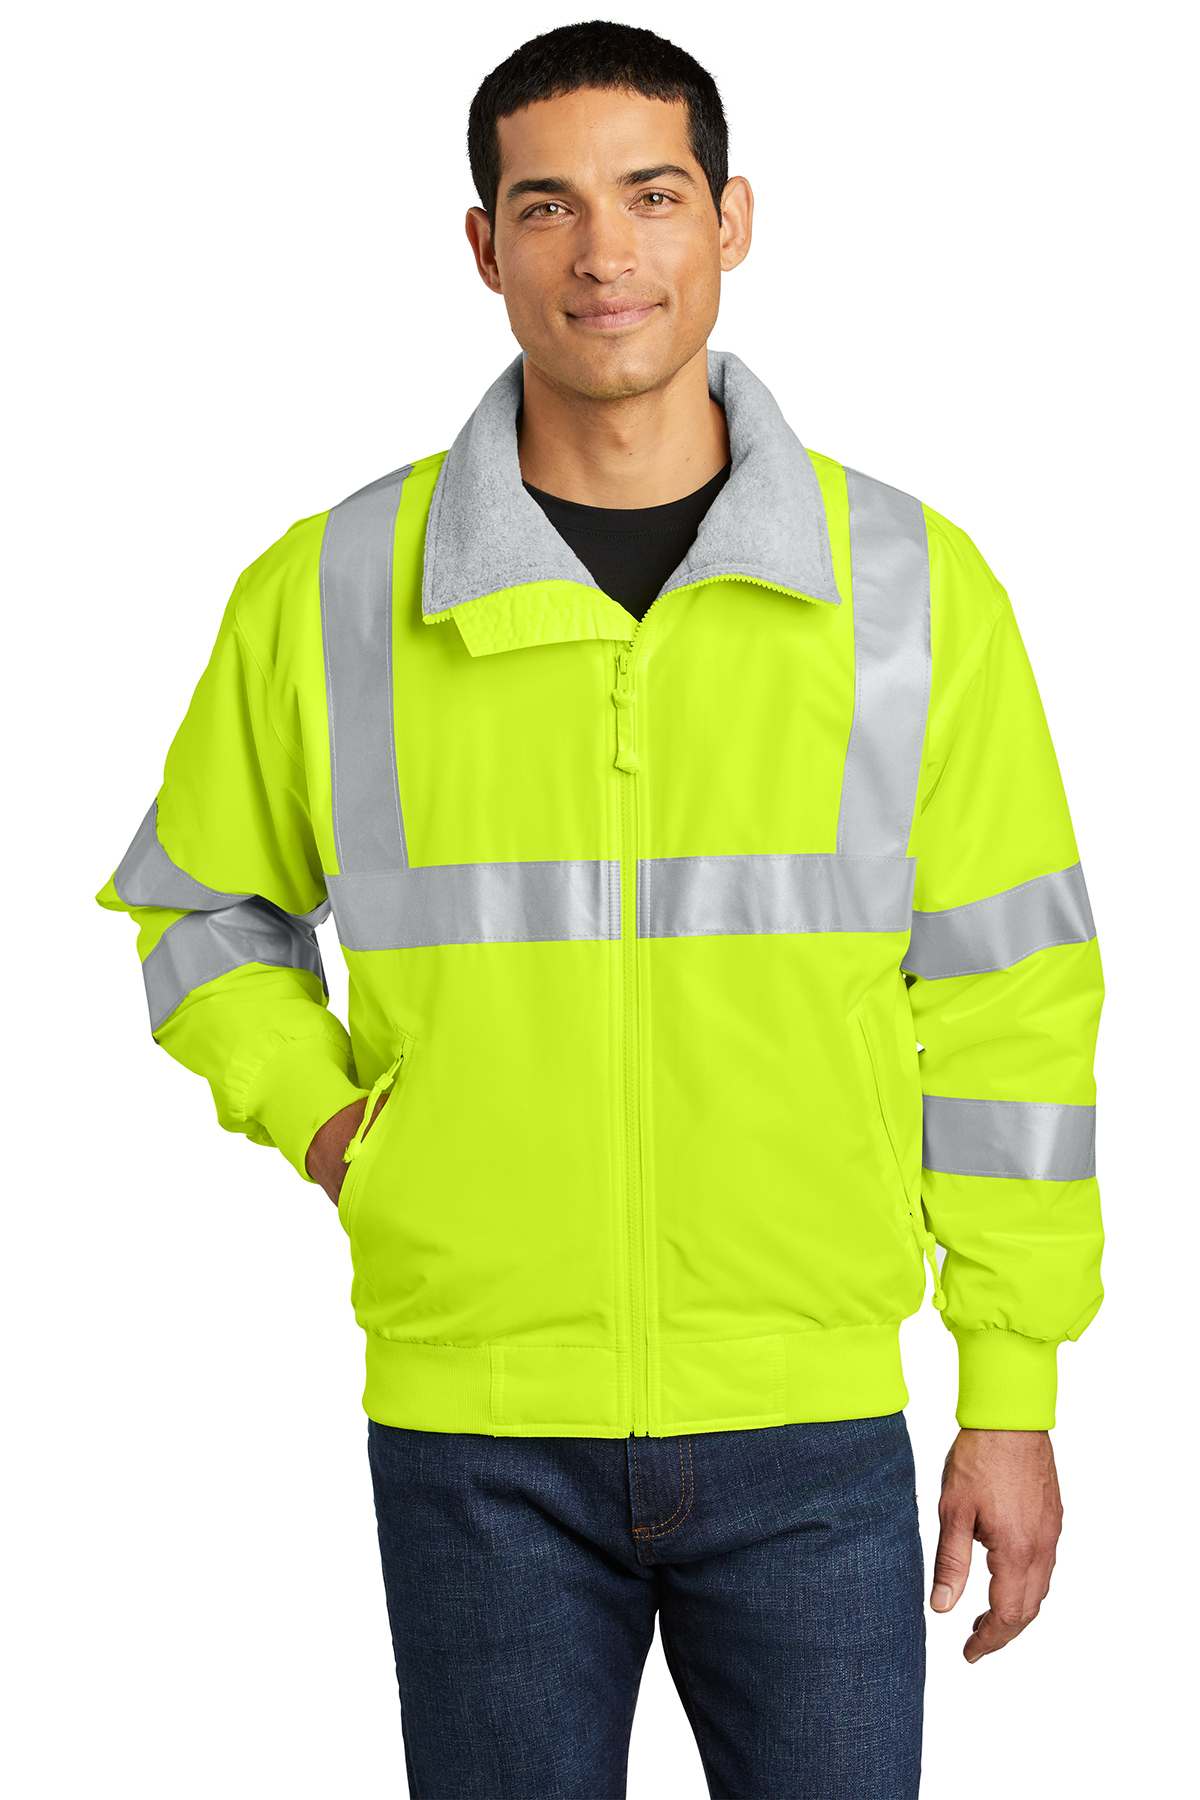 Exclusive Jacket Yellow - SafetyGear.my